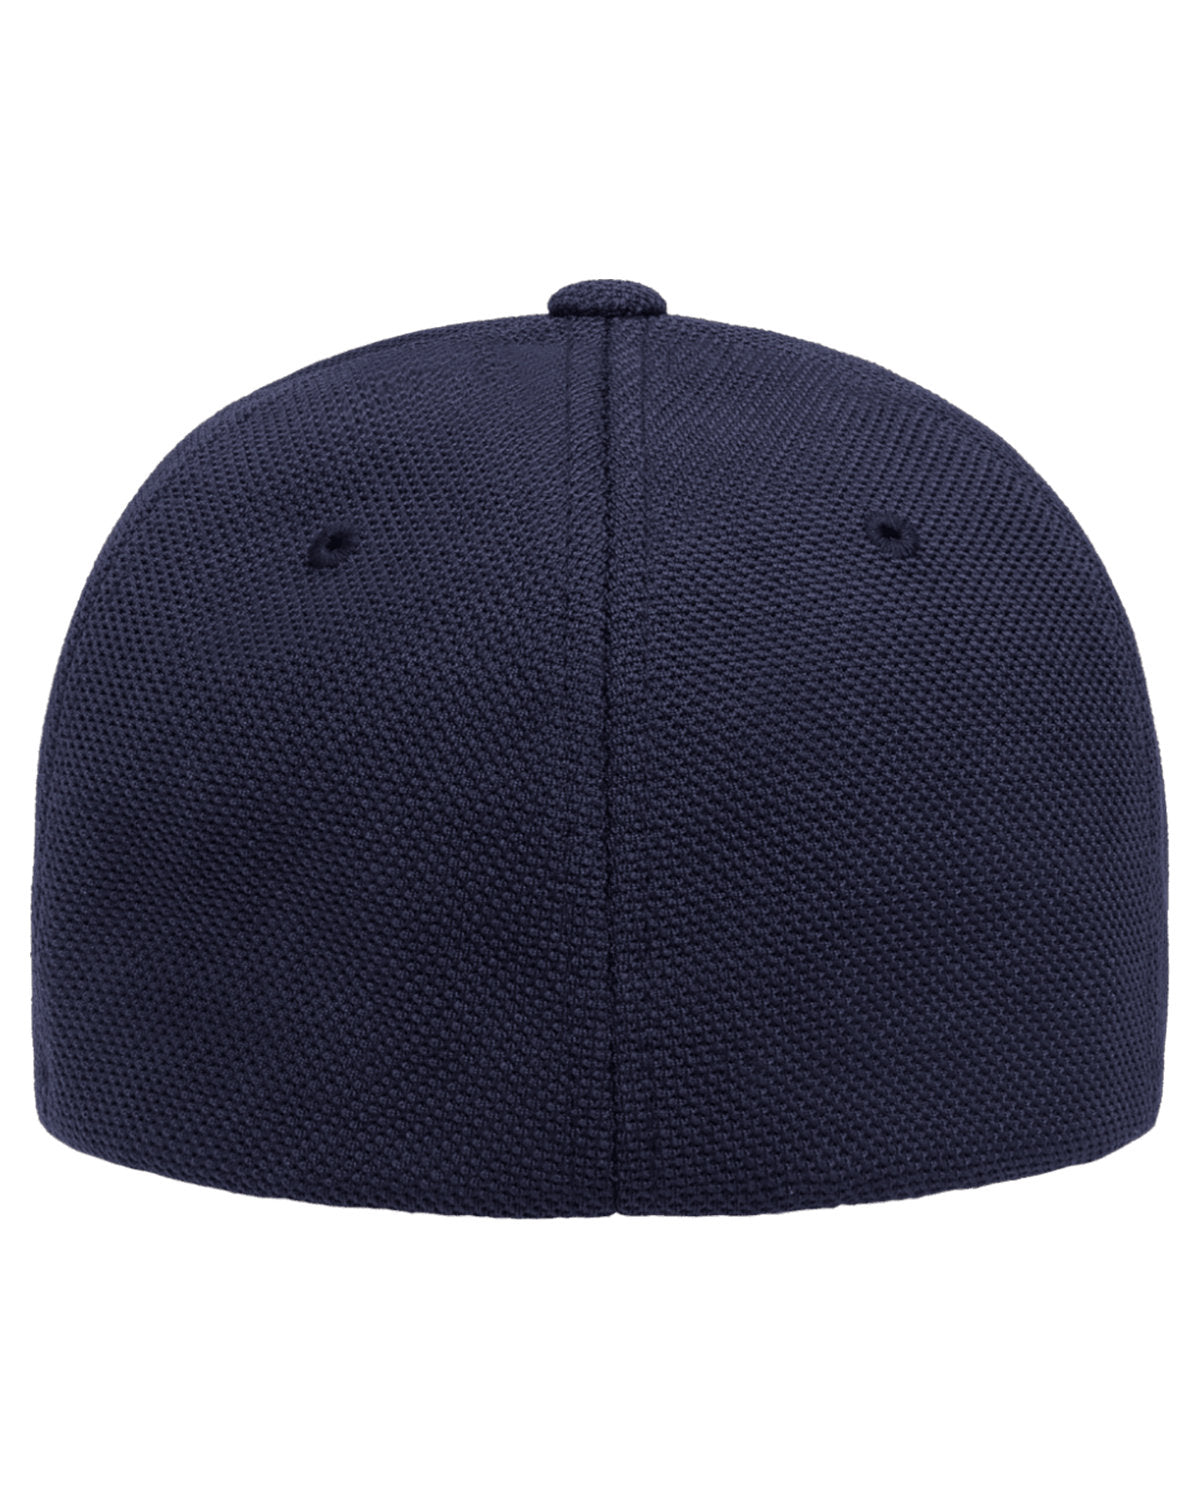 Flexfit Cool & Dry Pique Mesh Branded Caps, Navy